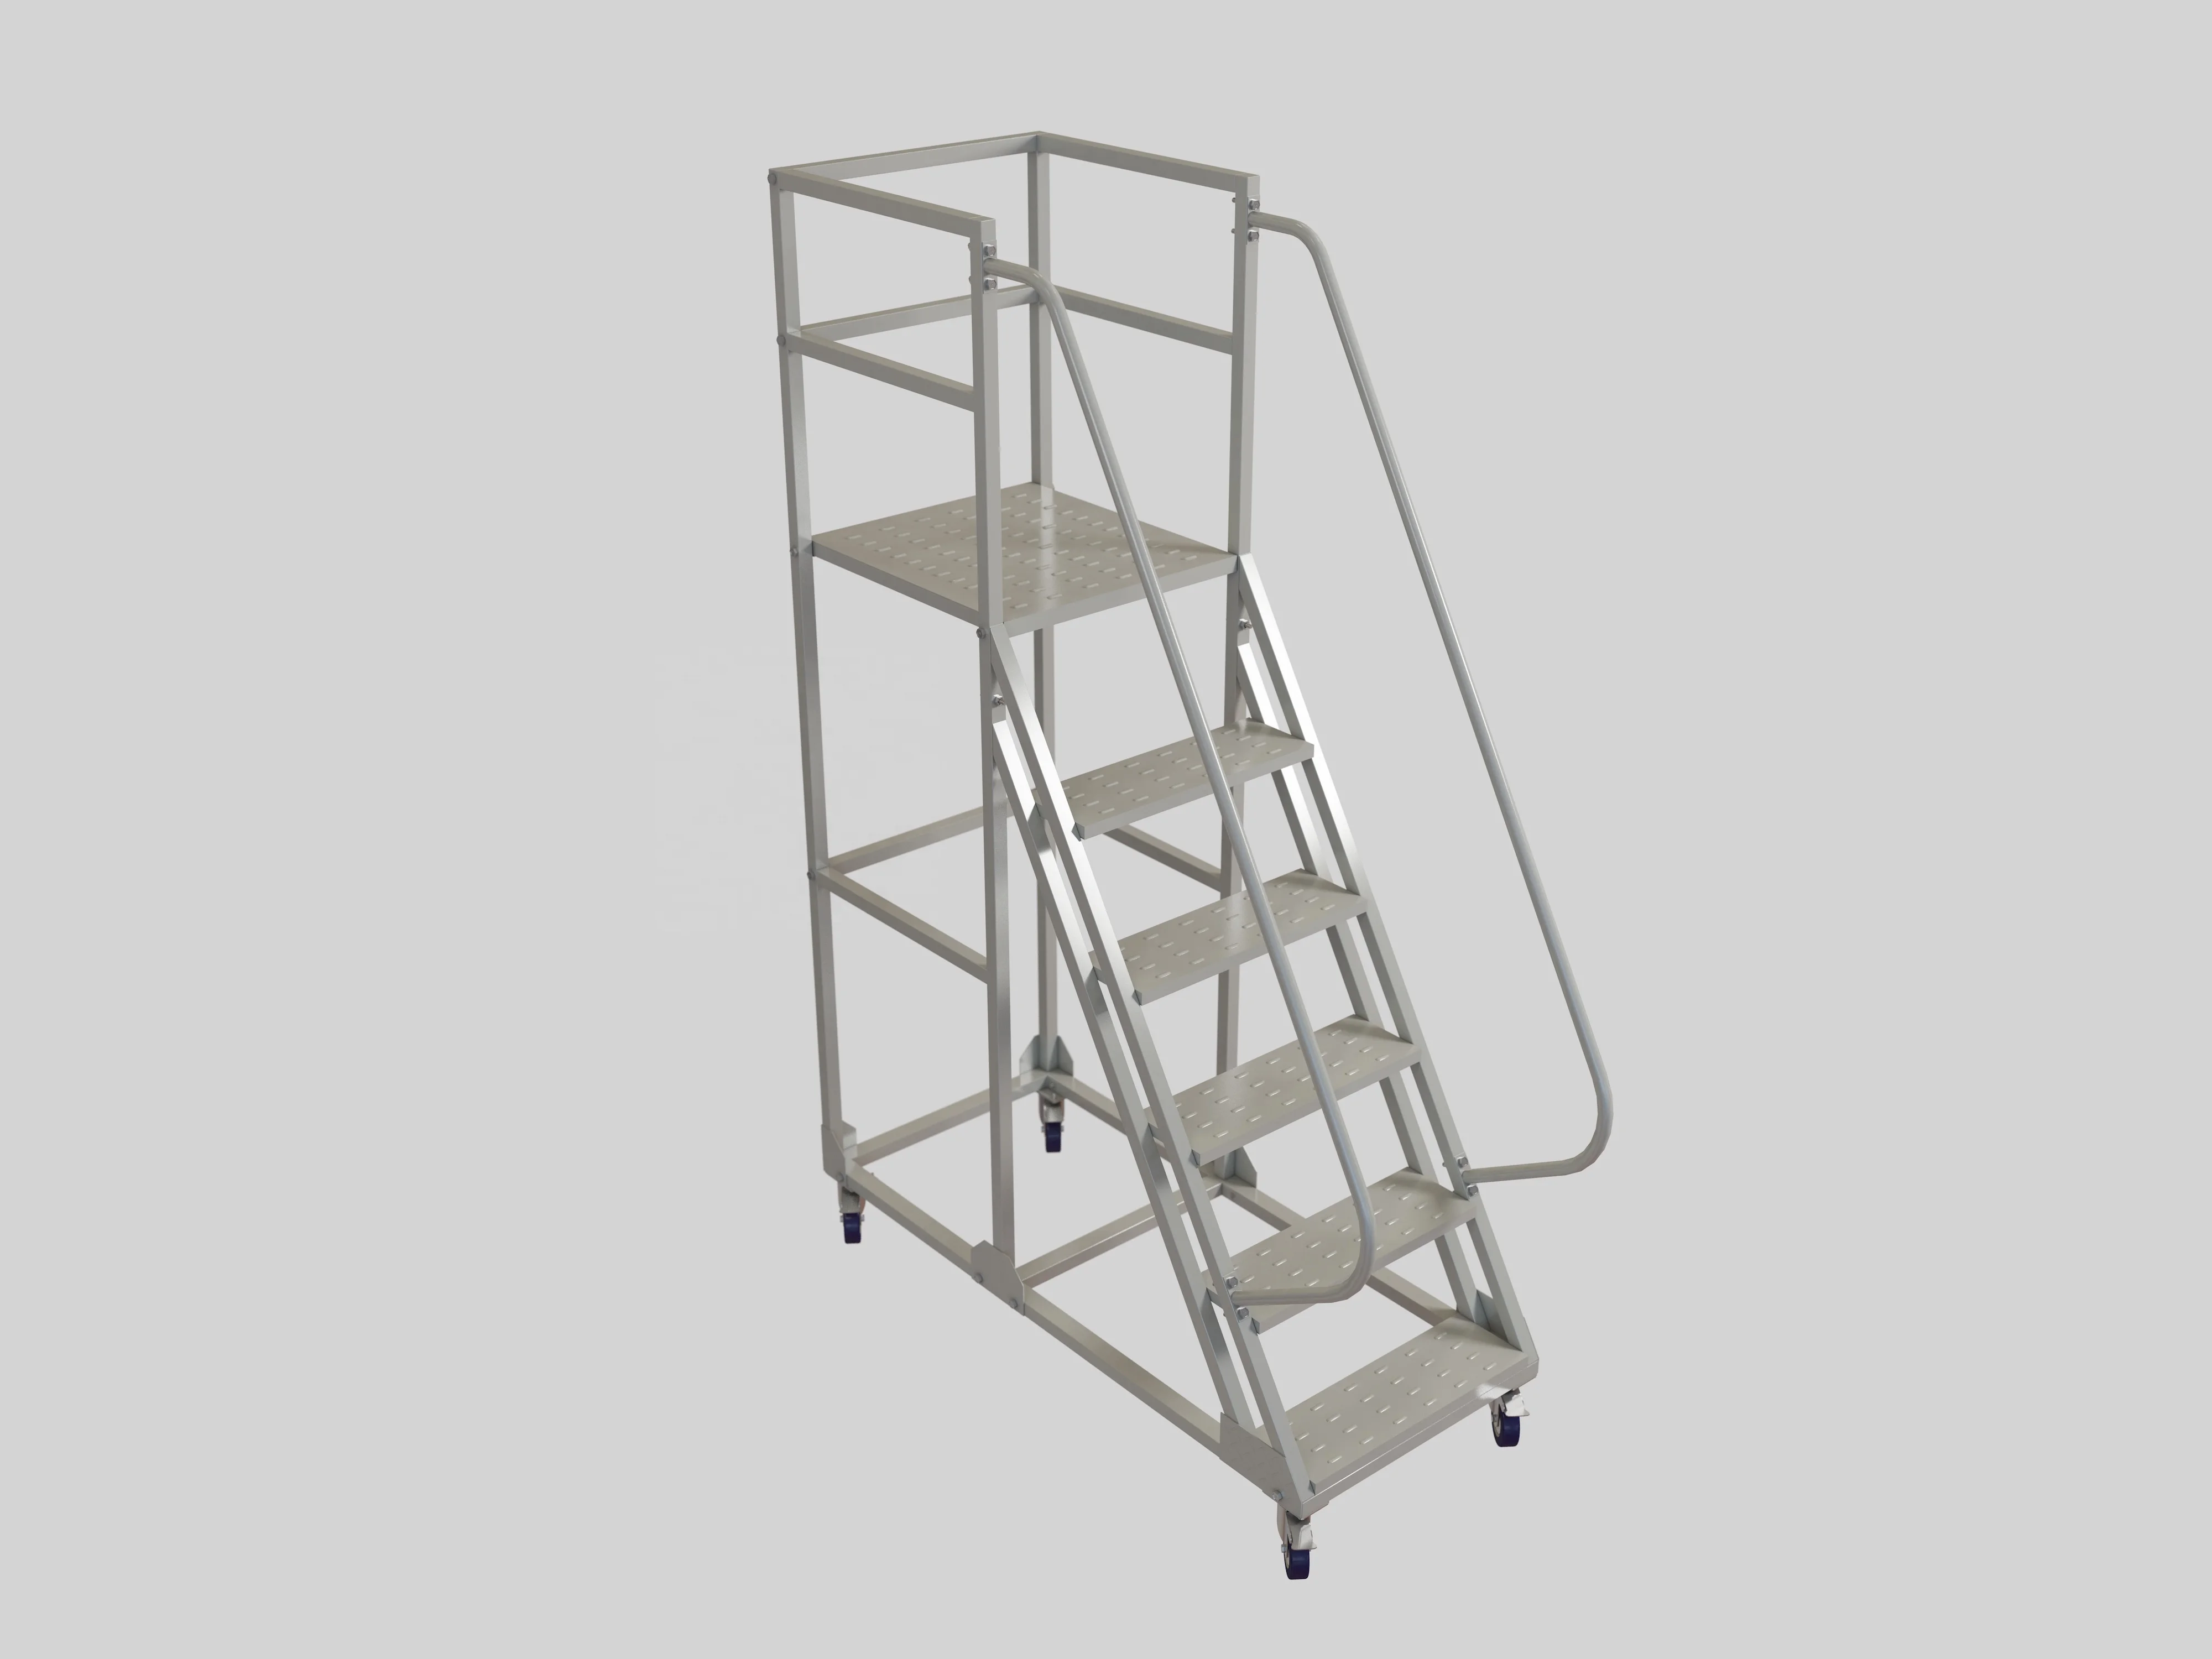 
White good quality aluminium wheel ladder 